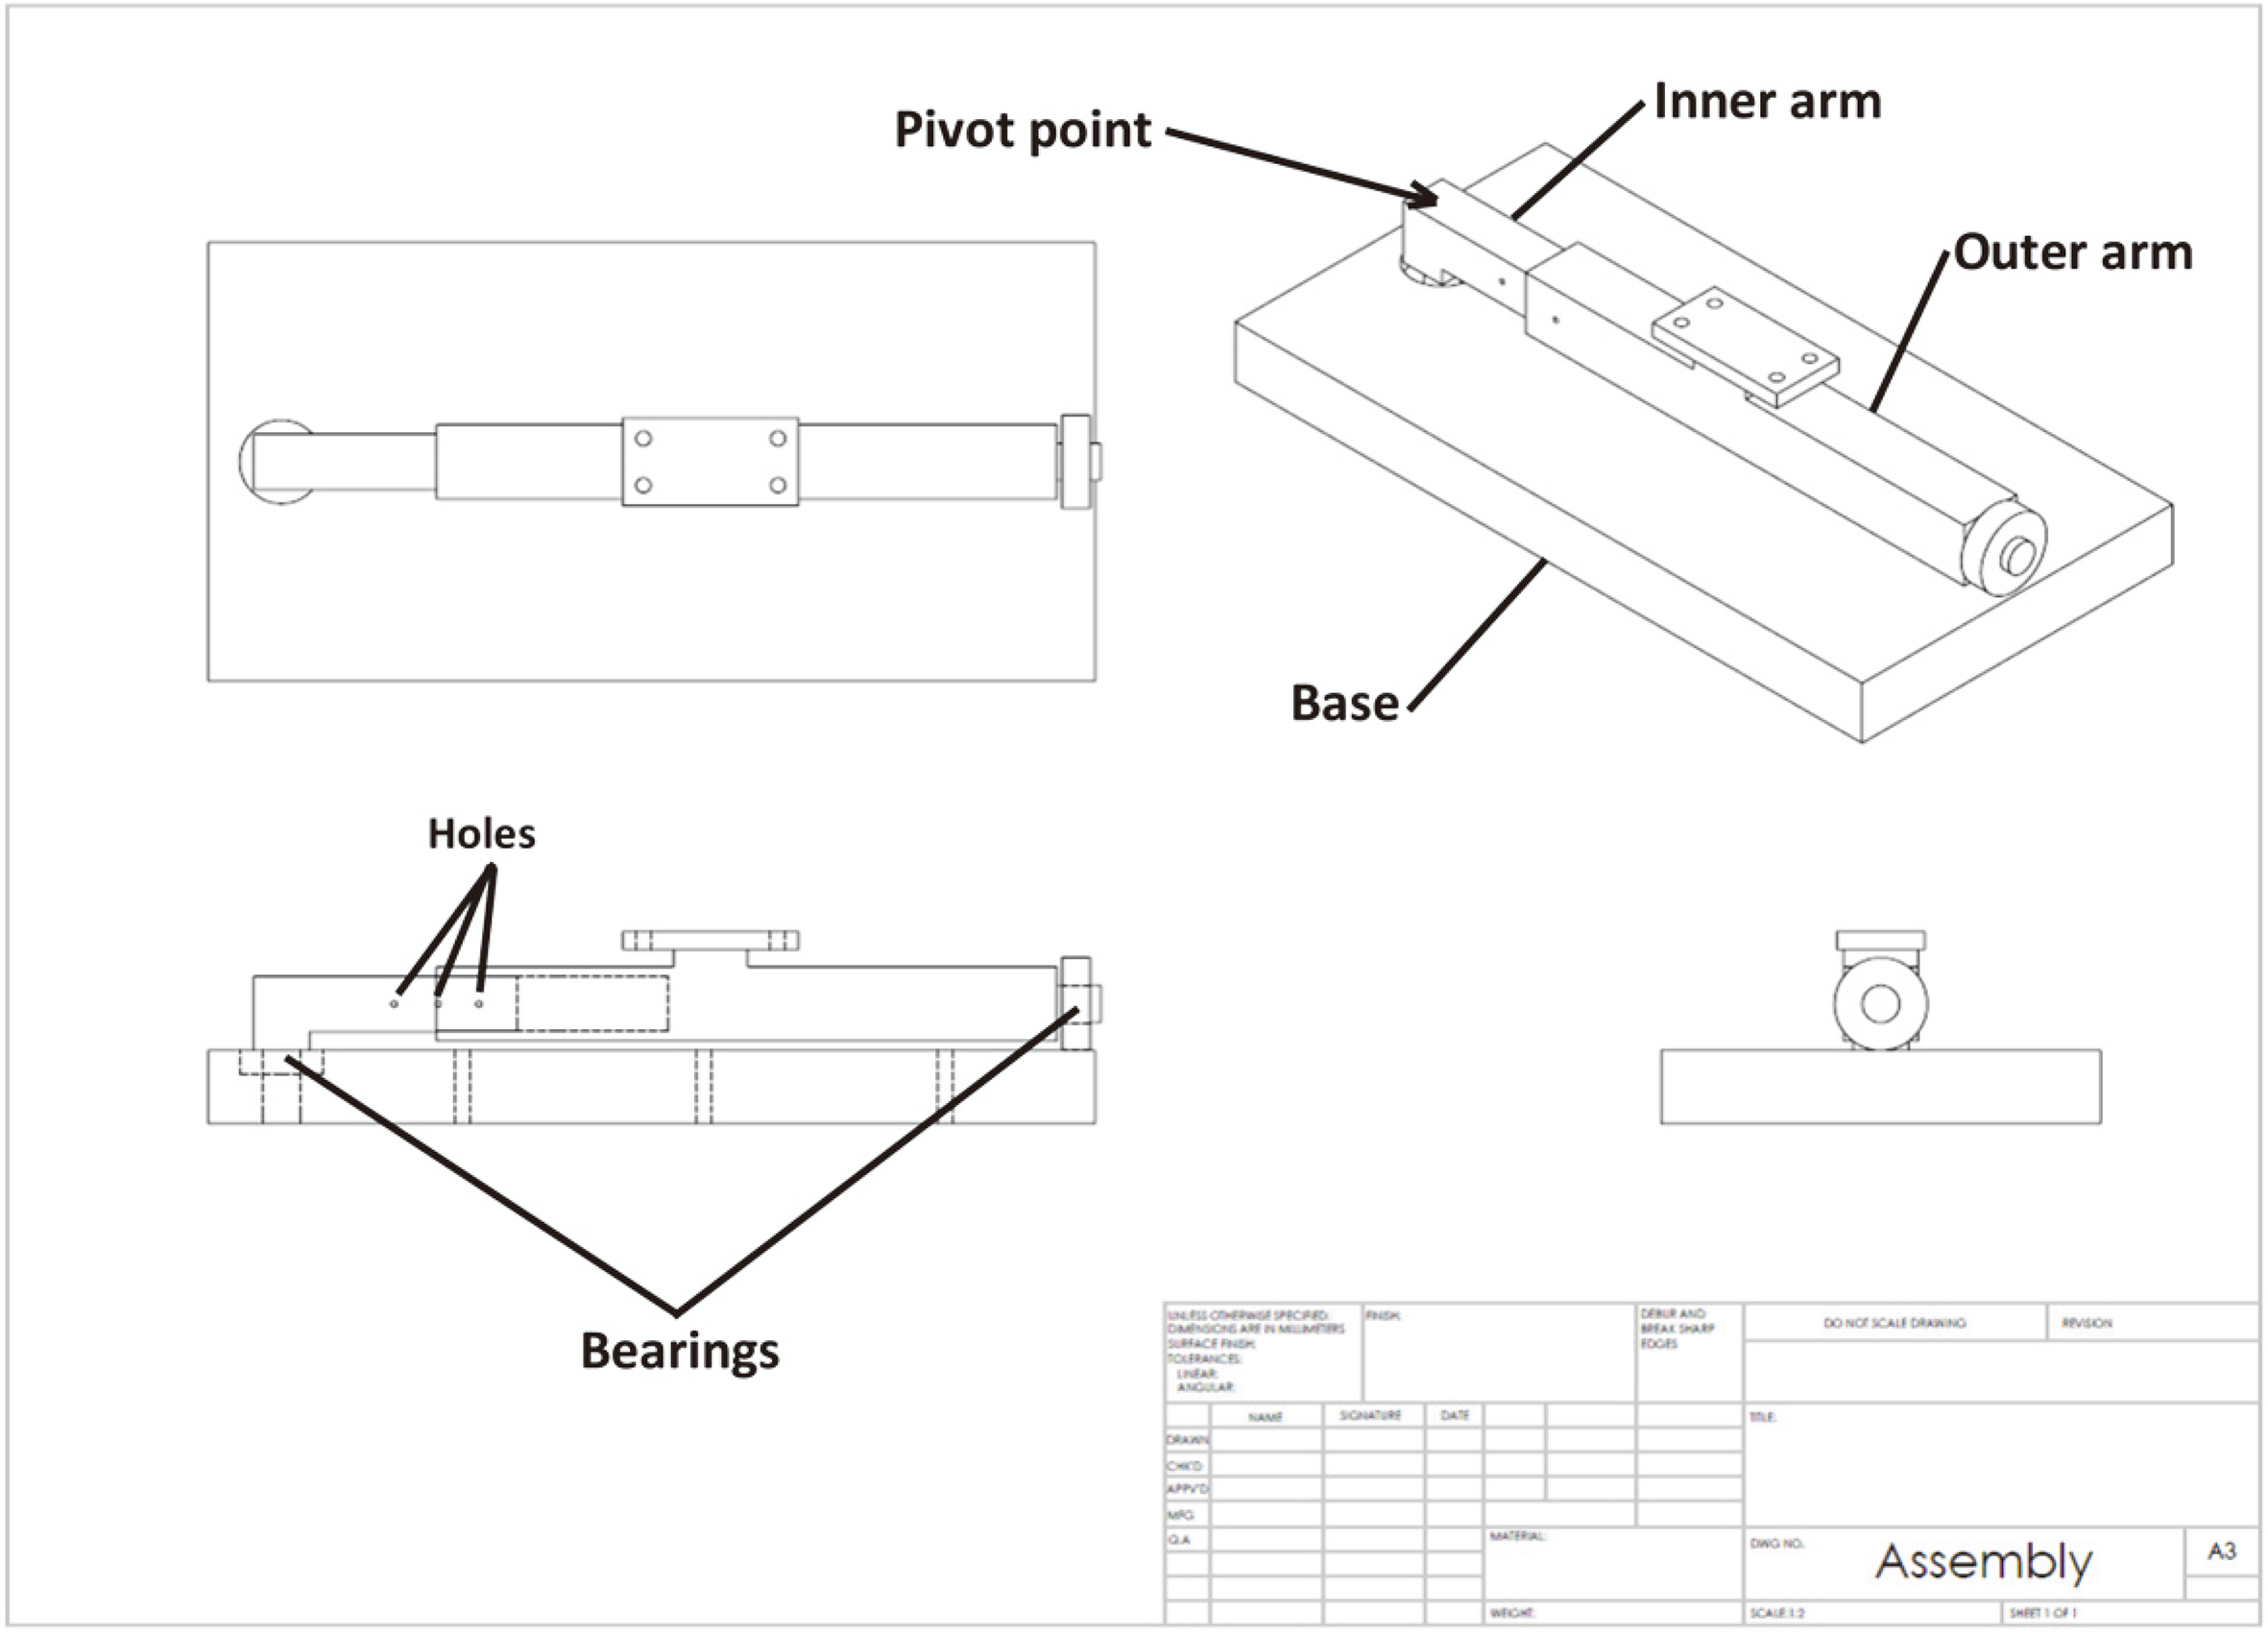 Horizontally dynamic armrest assembly drawing.